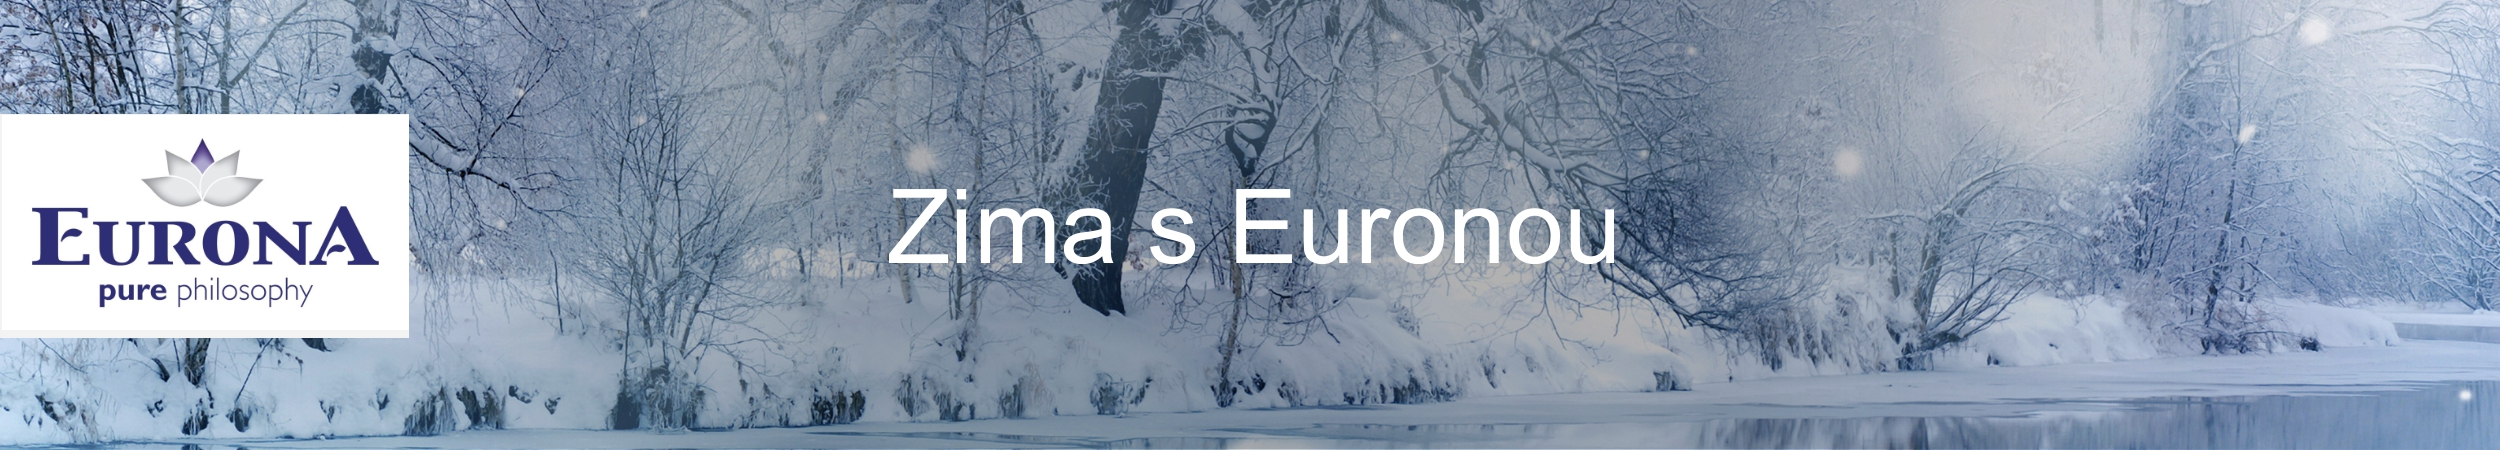 Zima s Euronou